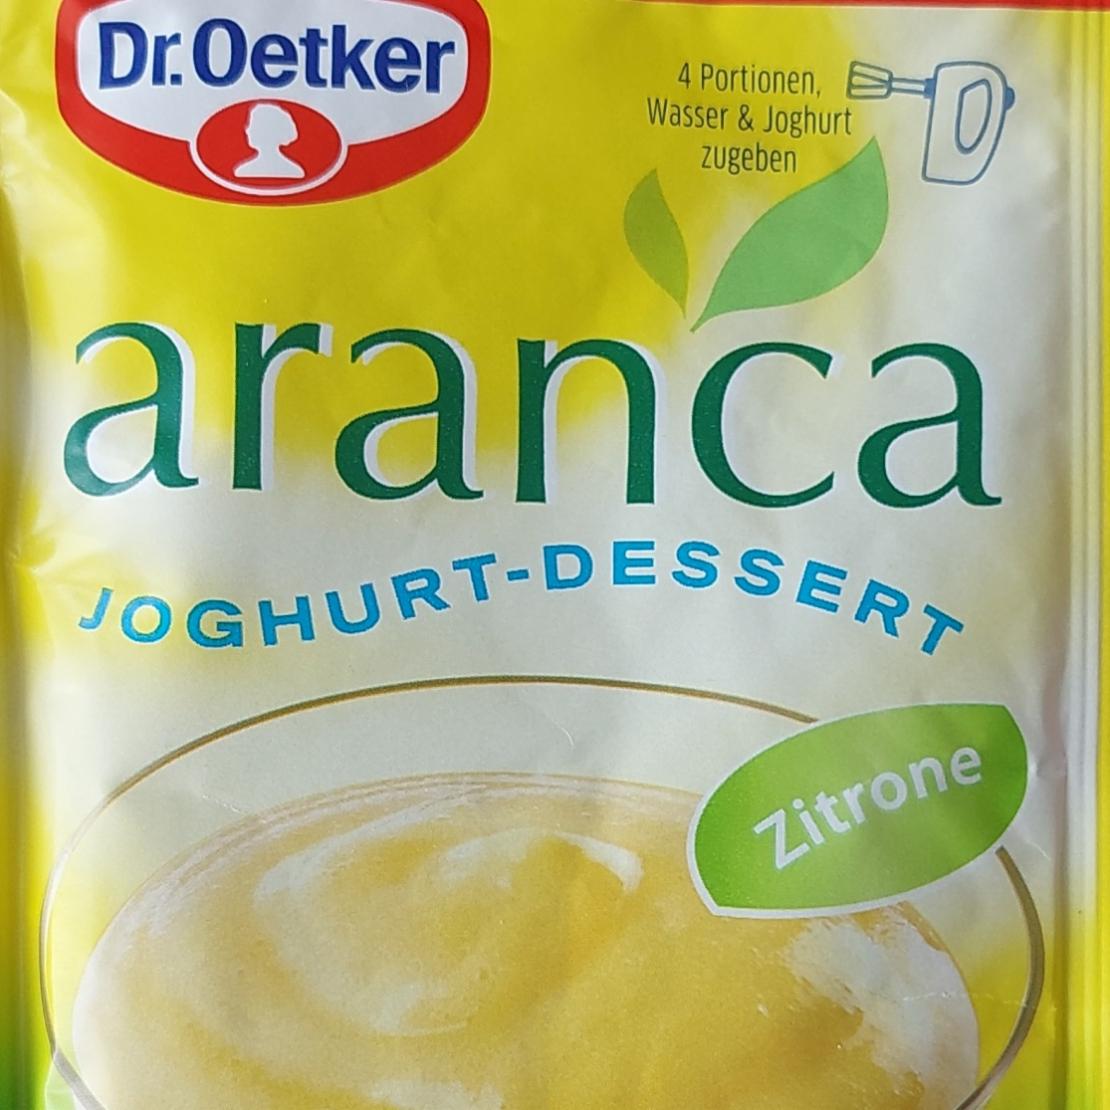 Fotografie - Dr Oetker Aranca joghurt-dessert Zitrone